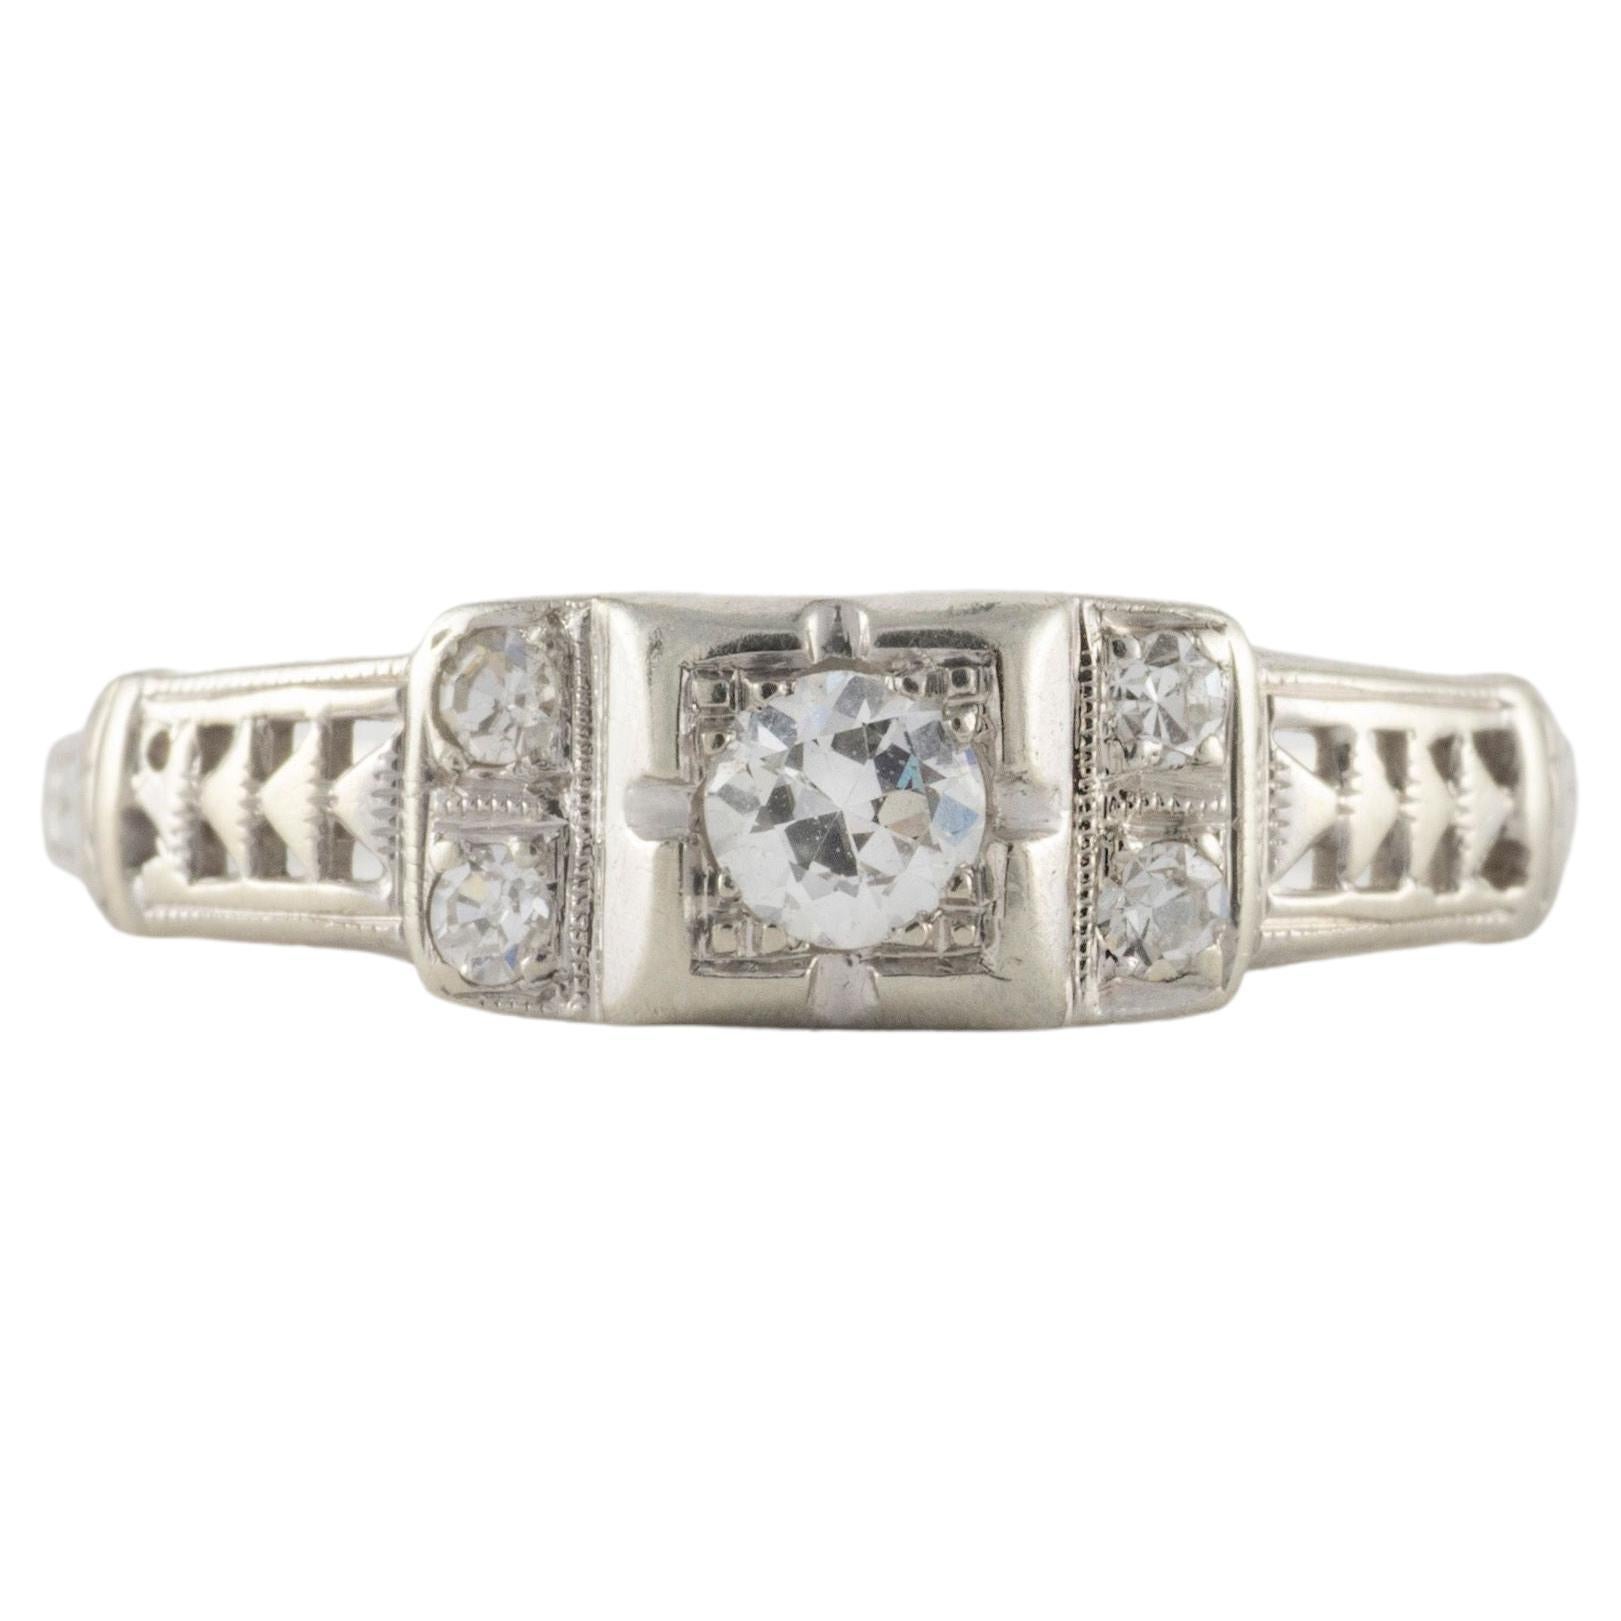 Art Deco Diamond and Filigree Ring 